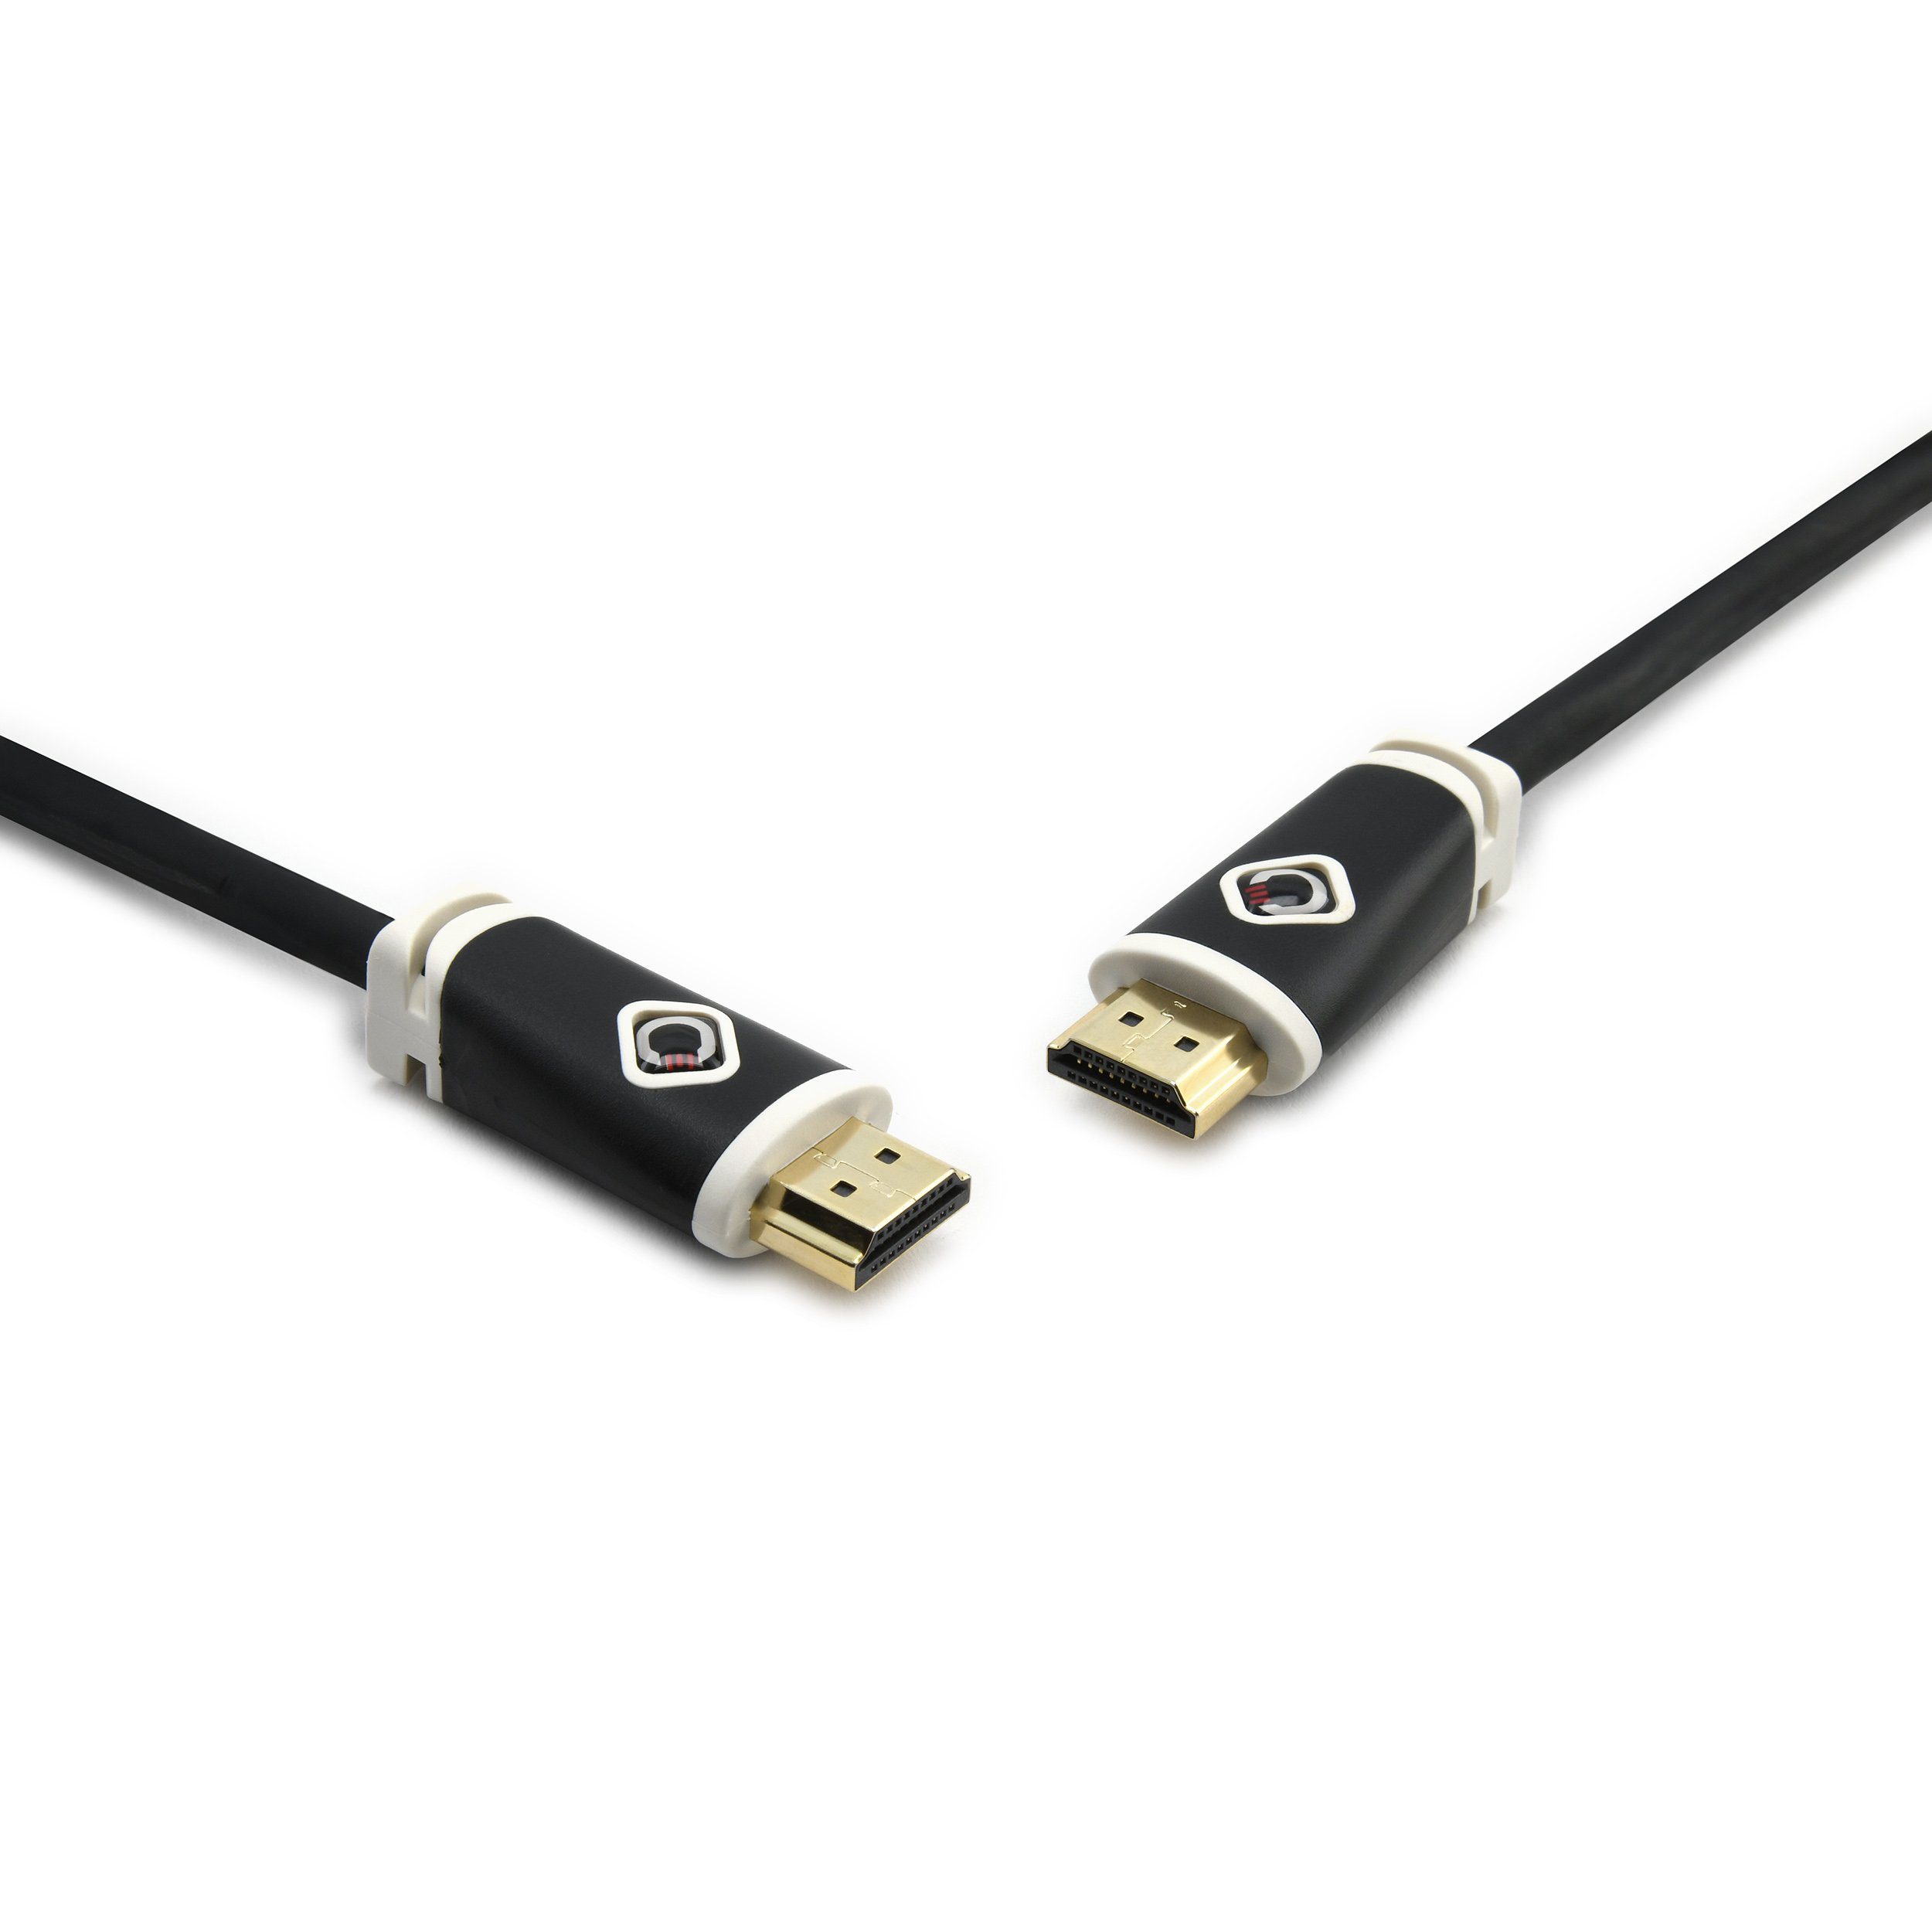 Oehlbach »Easy Connect HDMI – High Speed HDMI-Kabel mit Ethernet, 4K,  UltraHD, 18 Gbit/s - 0,75m« HDMI-Kabel, (75 cm) online kaufen | OTTO